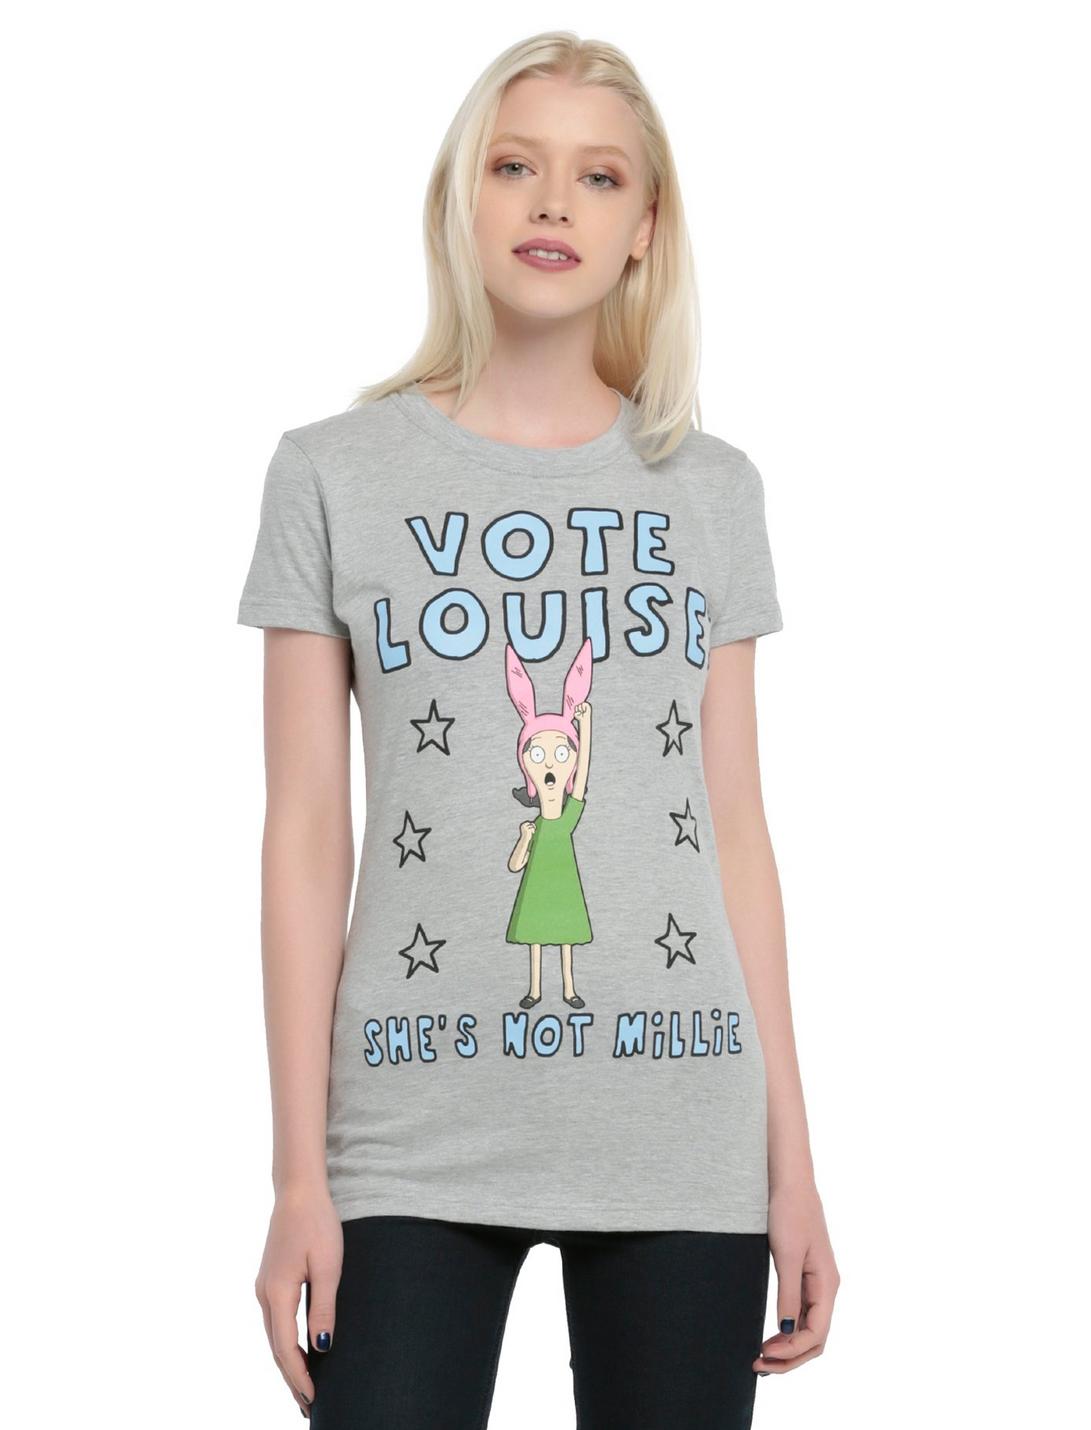 Bob's Burger's Vote Louise Girls T-Shirt, GREY, hi-res